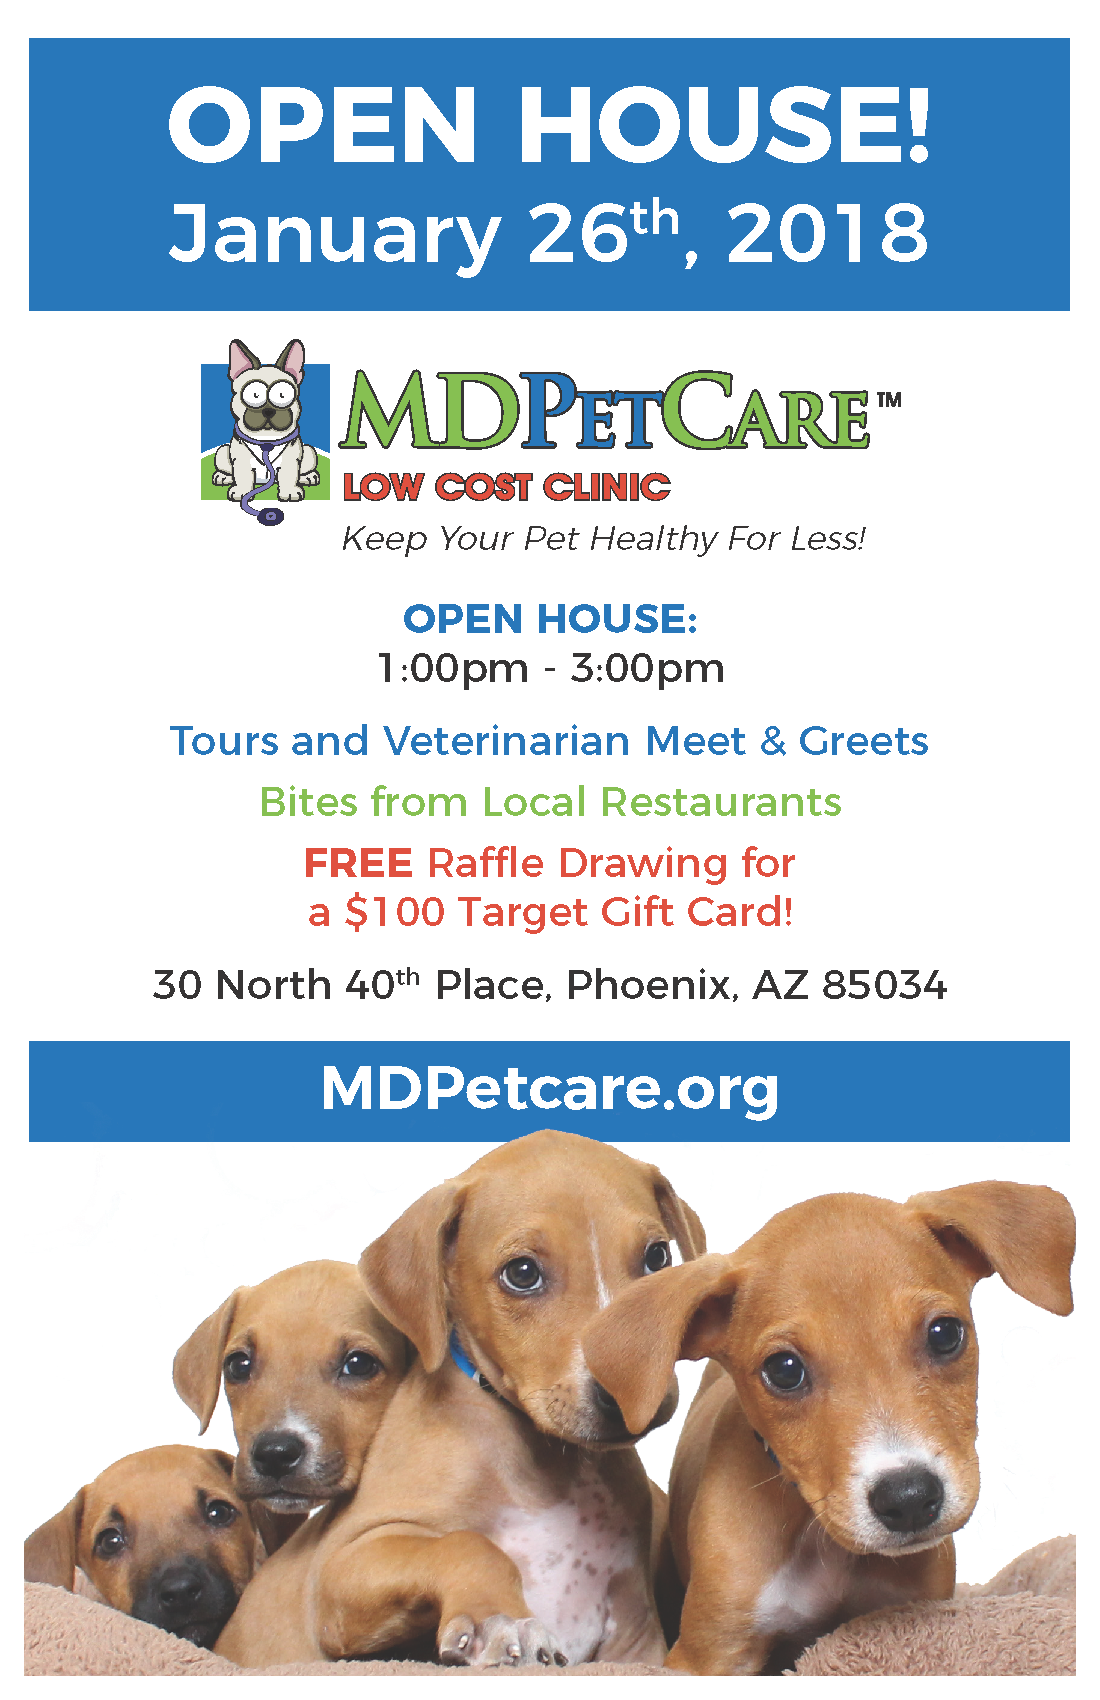 MD PetCare Open House | Arizona Animal Welfare League